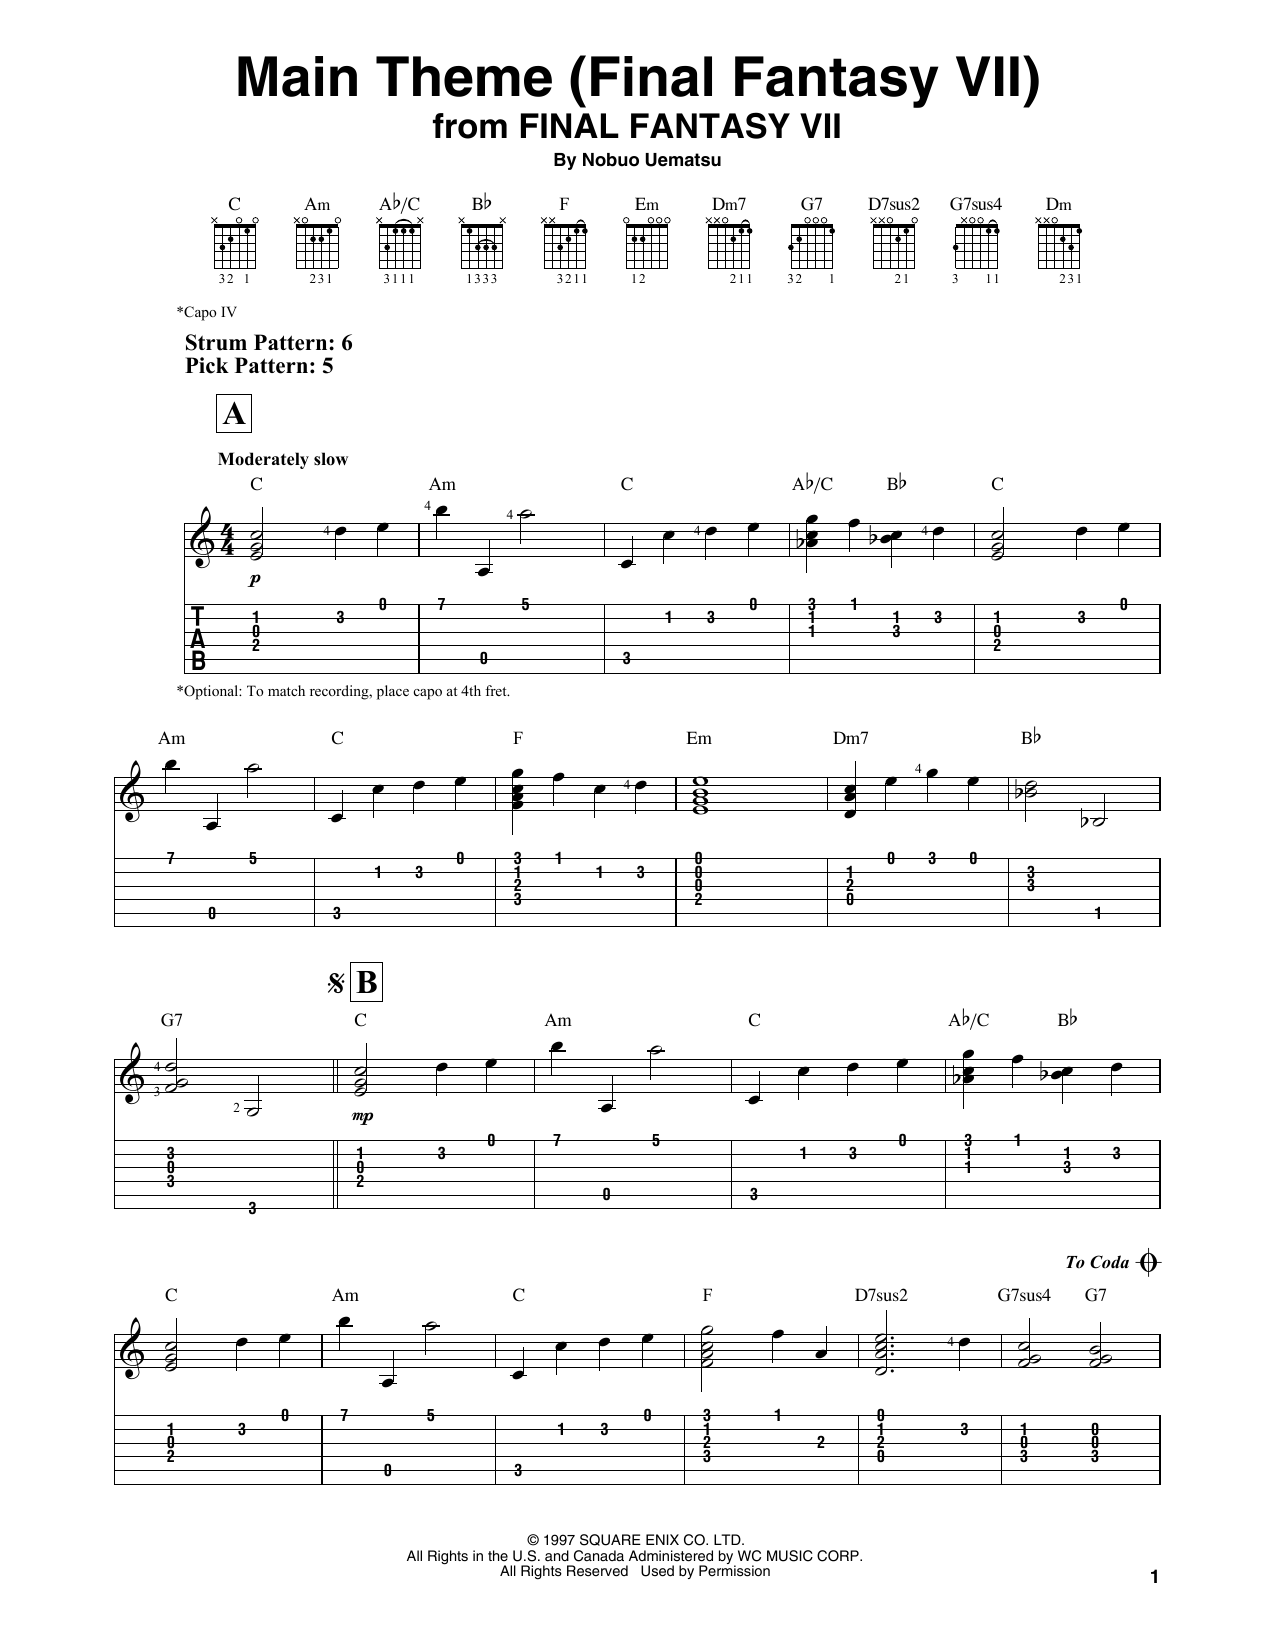 Nobuo Uematsu Main Theme (Final Fantasy VII) Sheet Music Notes & Chords for Solo Guitar Tab - Download or Print PDF